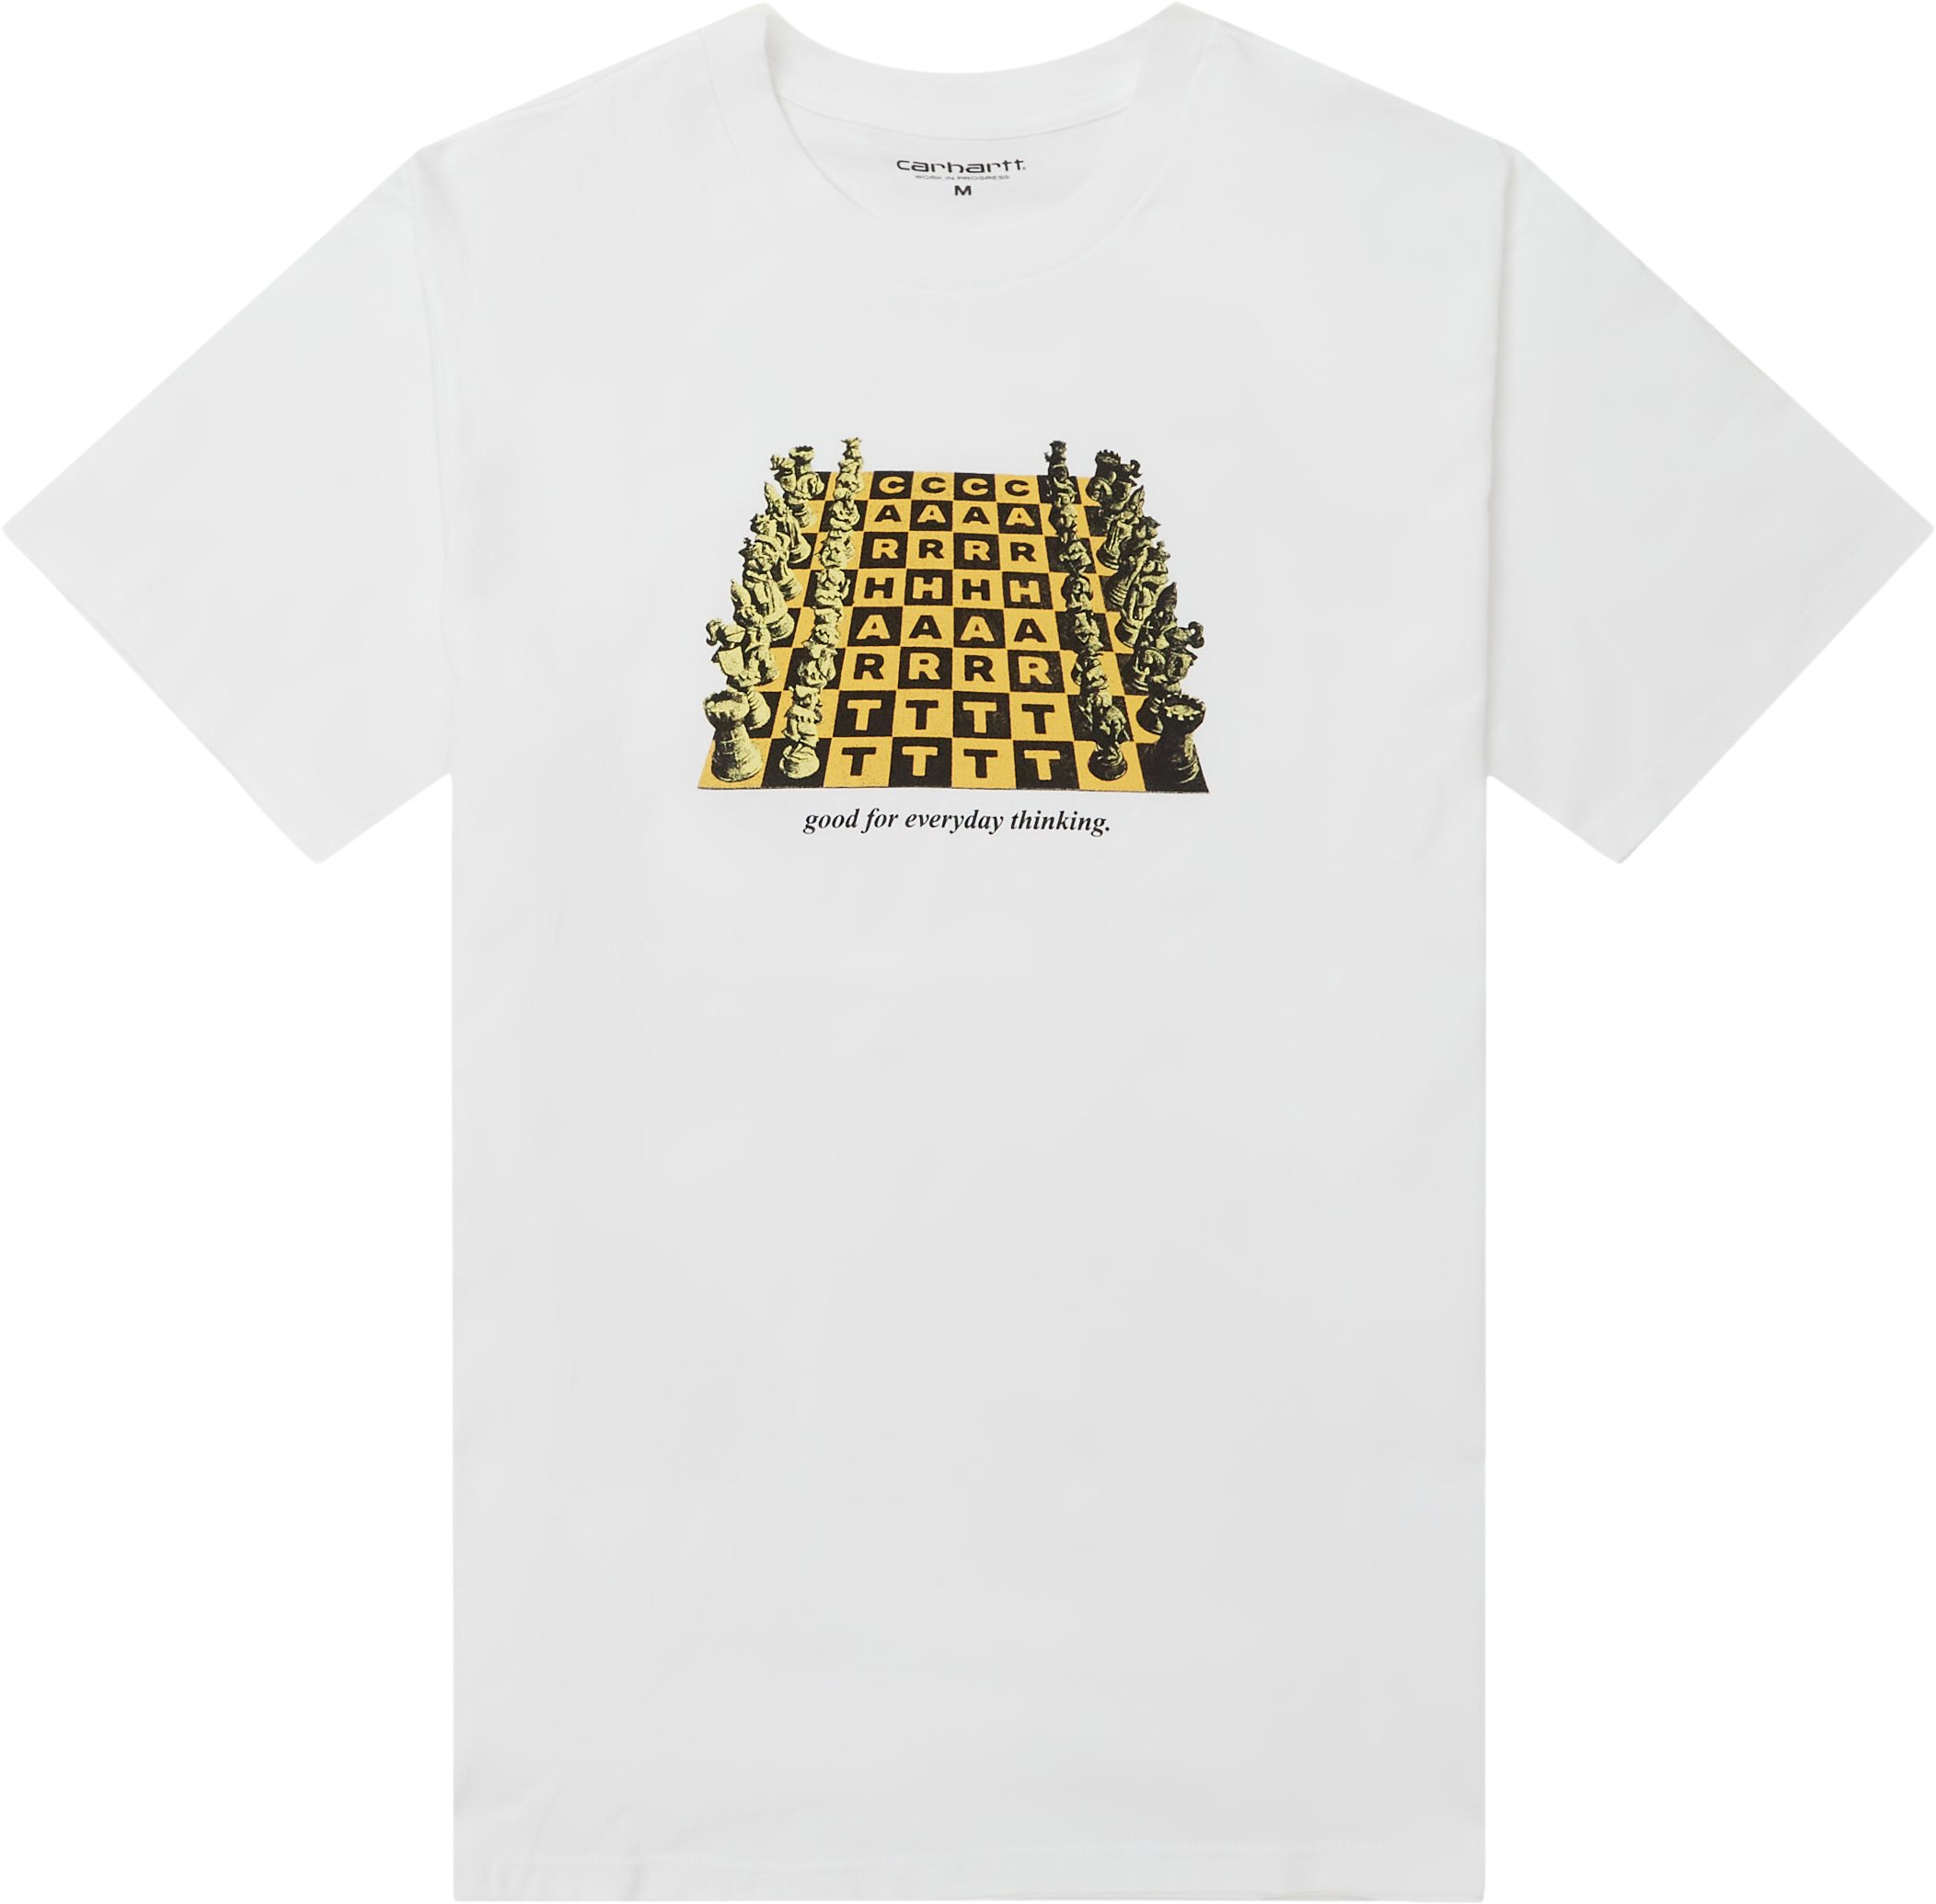 Chessboard Tee - T-shirts - Regular fit - Hvid